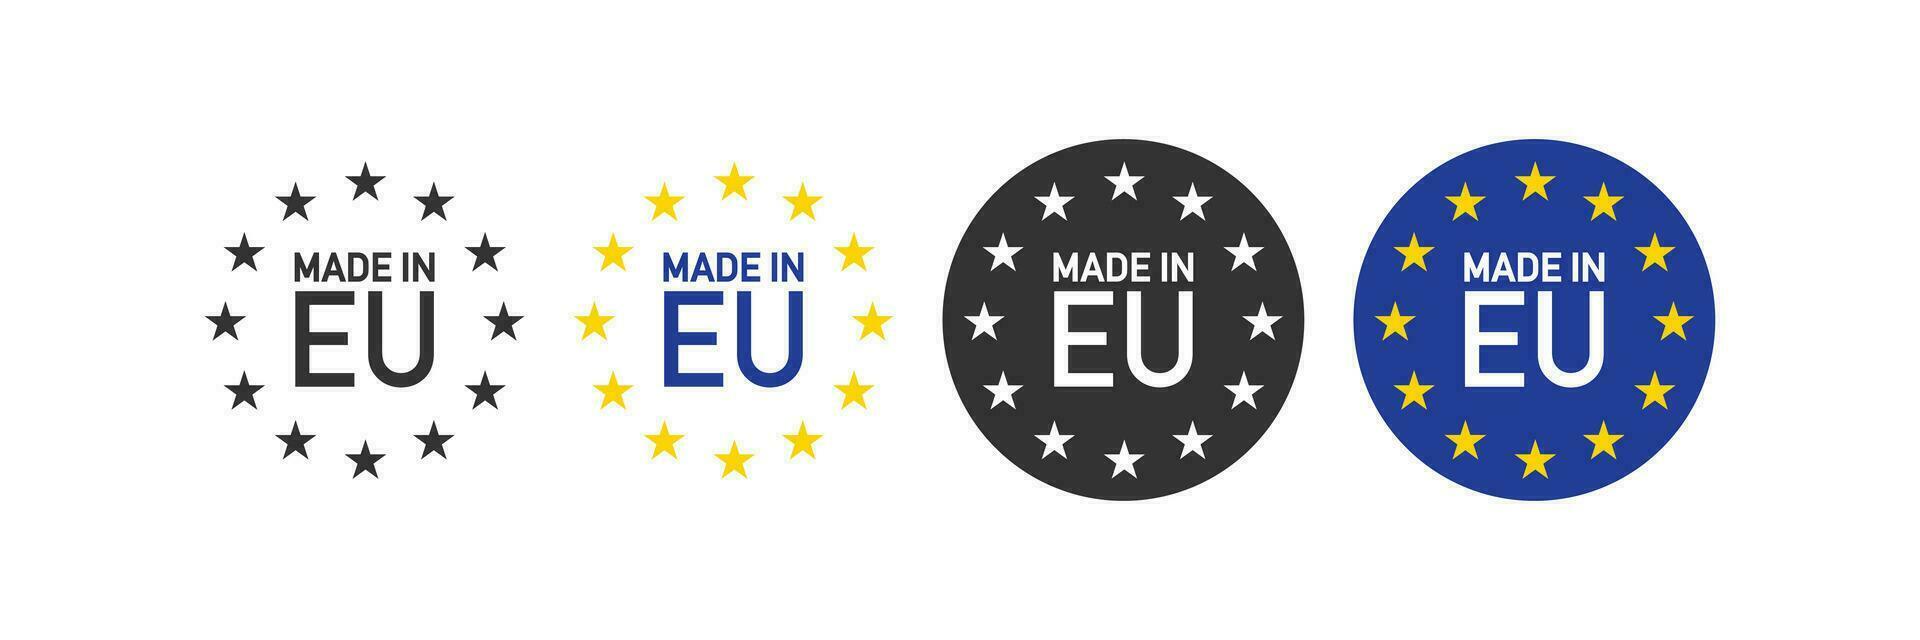 Made in EU icon. Vector illustration design.